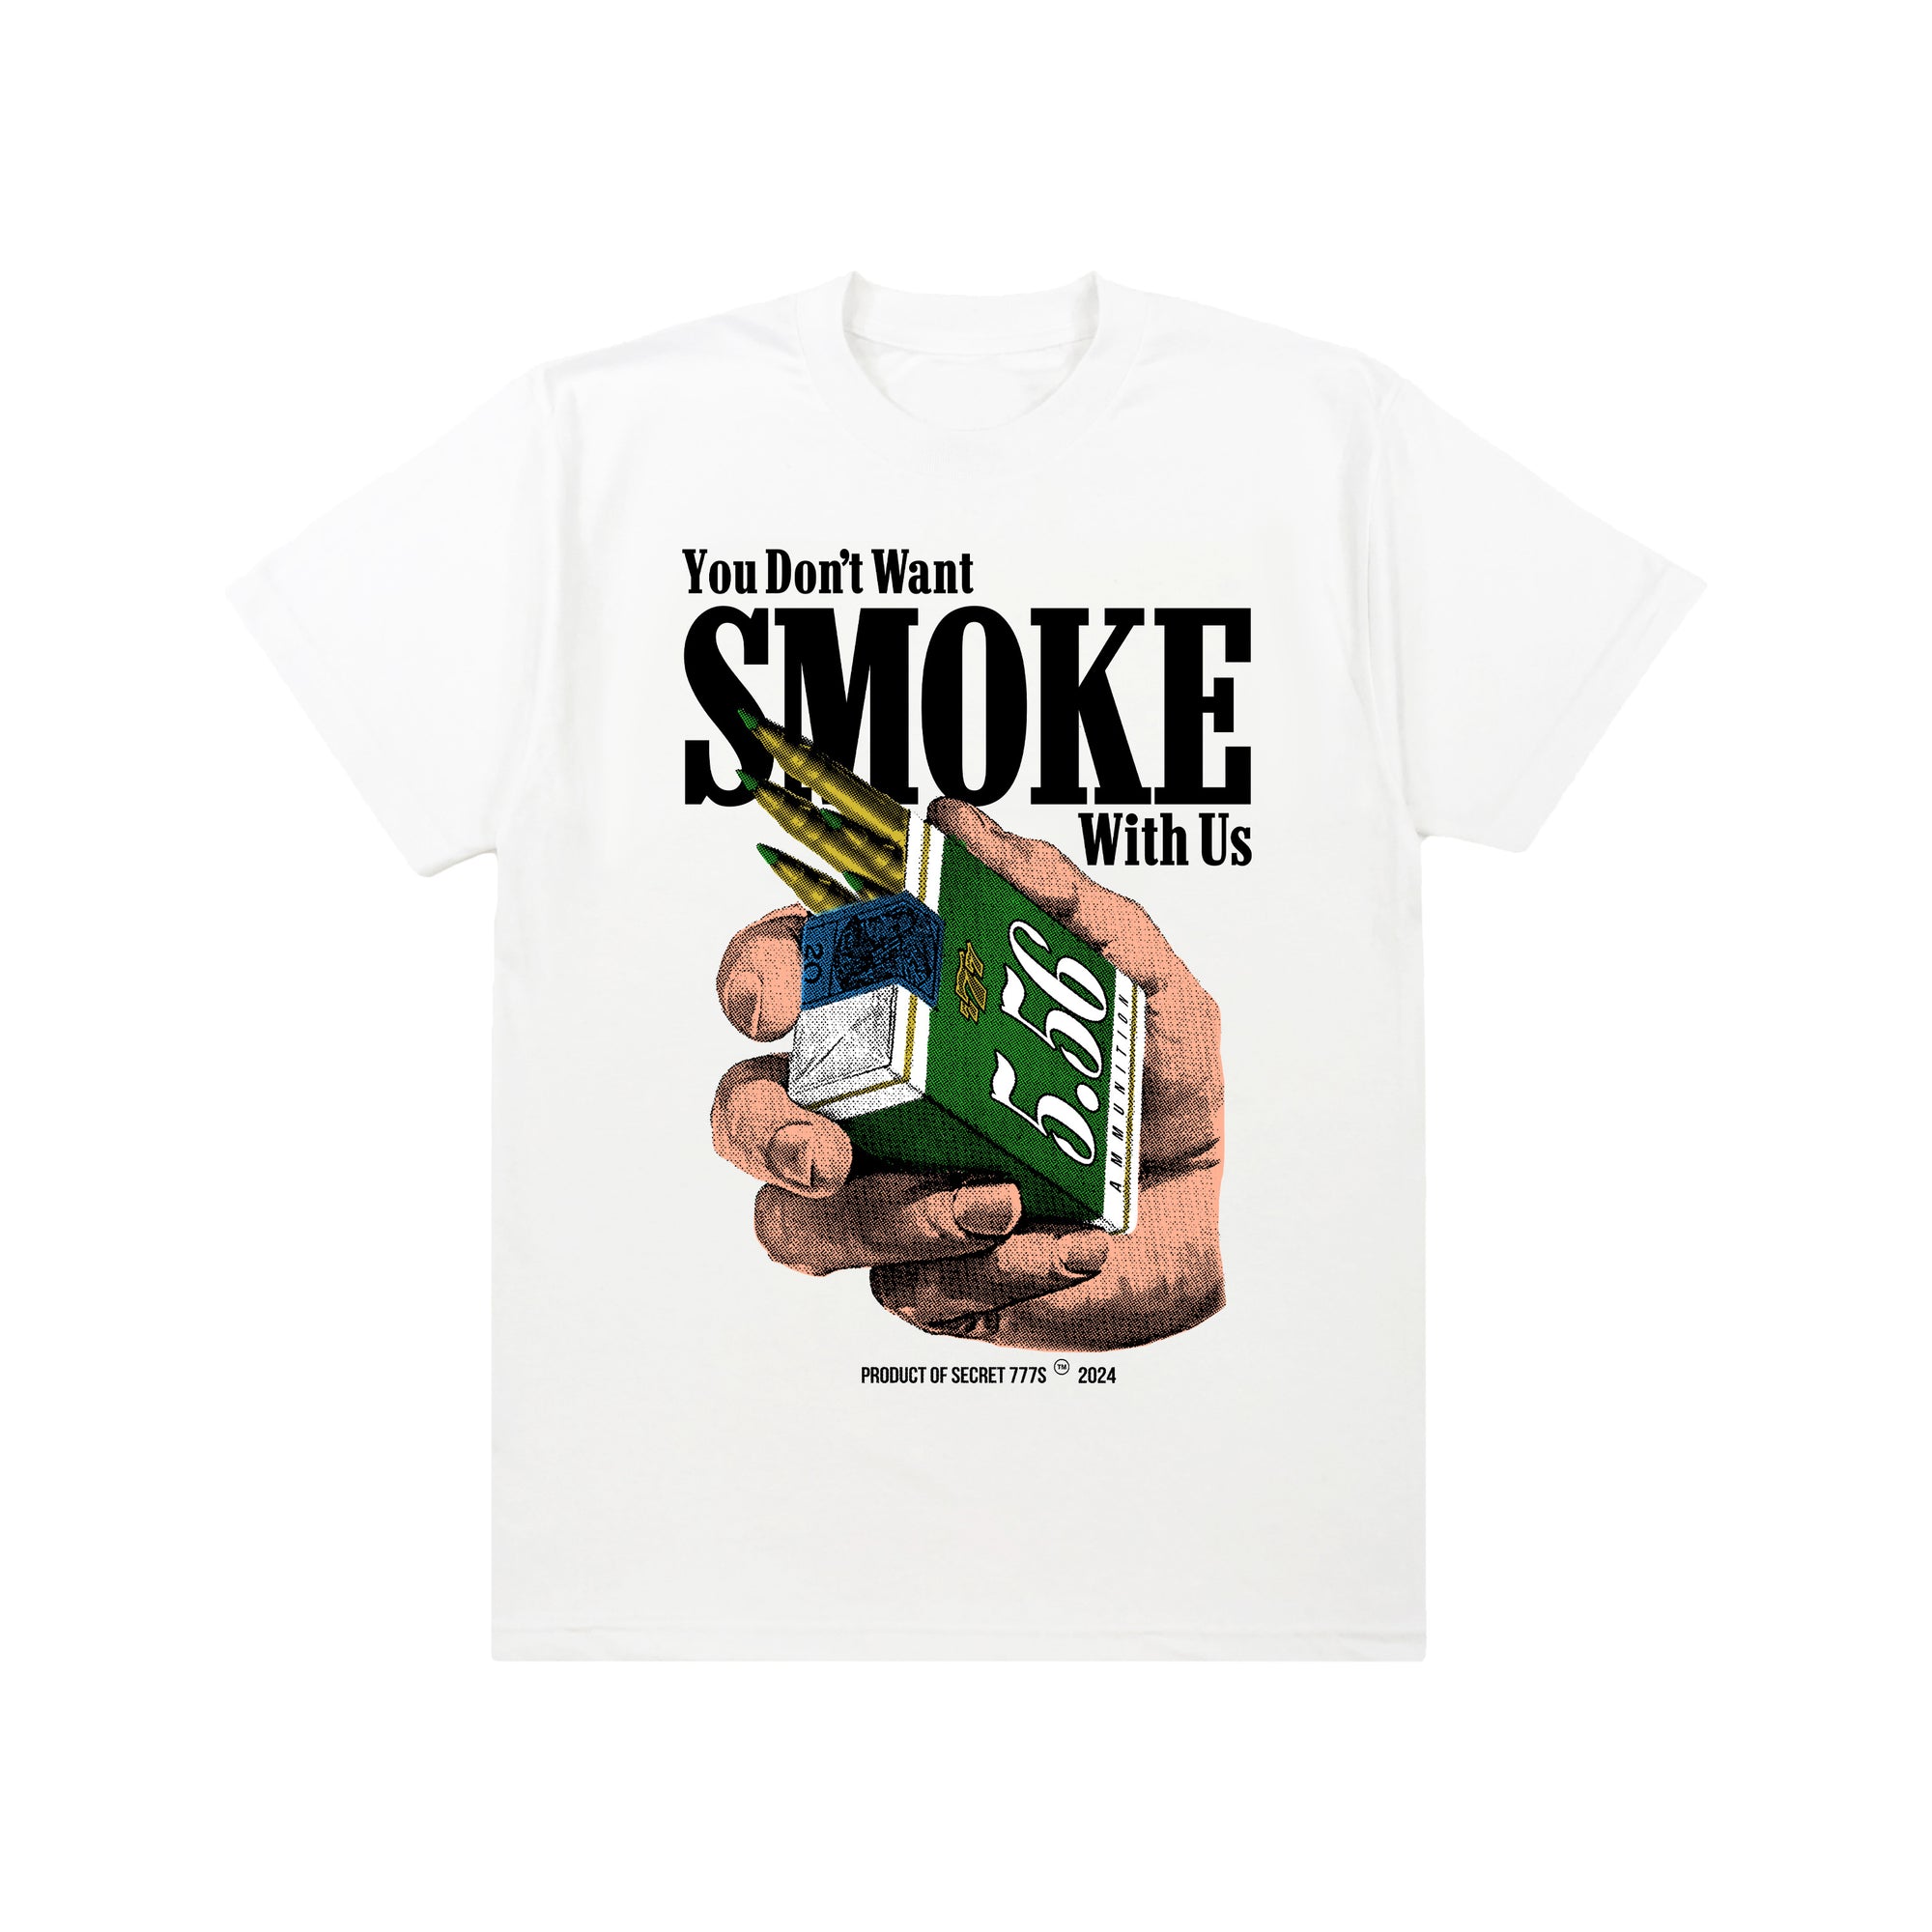 You Don't Want Smoke! (White Tee)